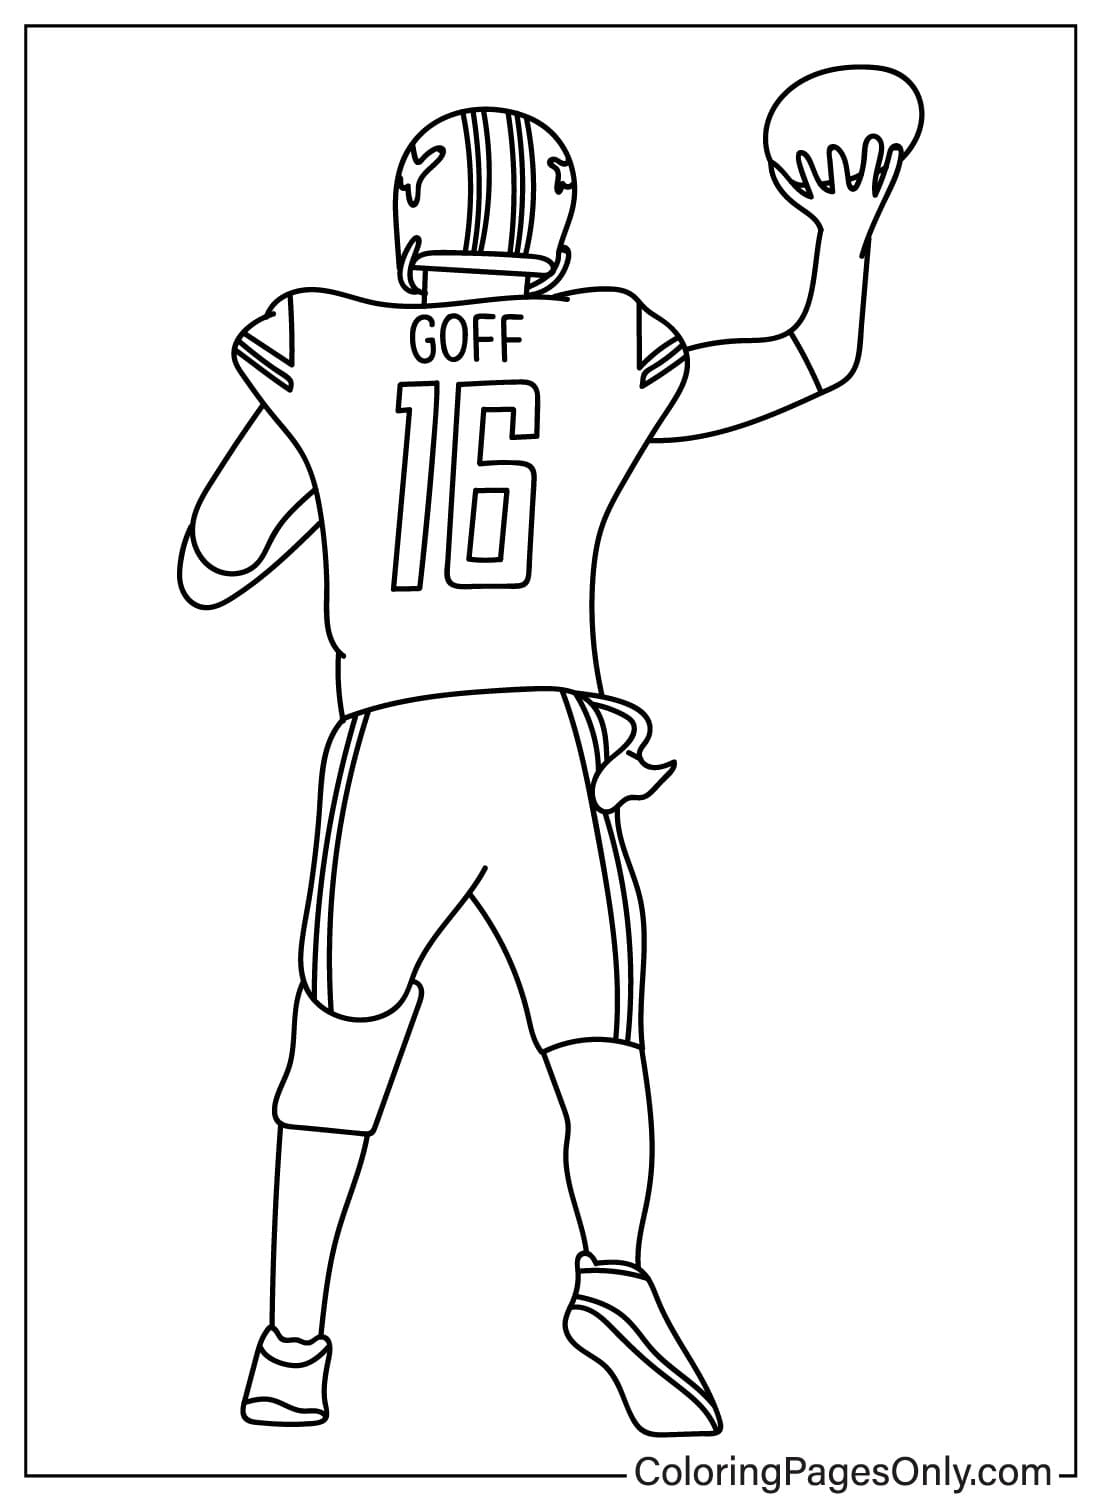 Página para colorir de Jared Goff do Detroit Lions